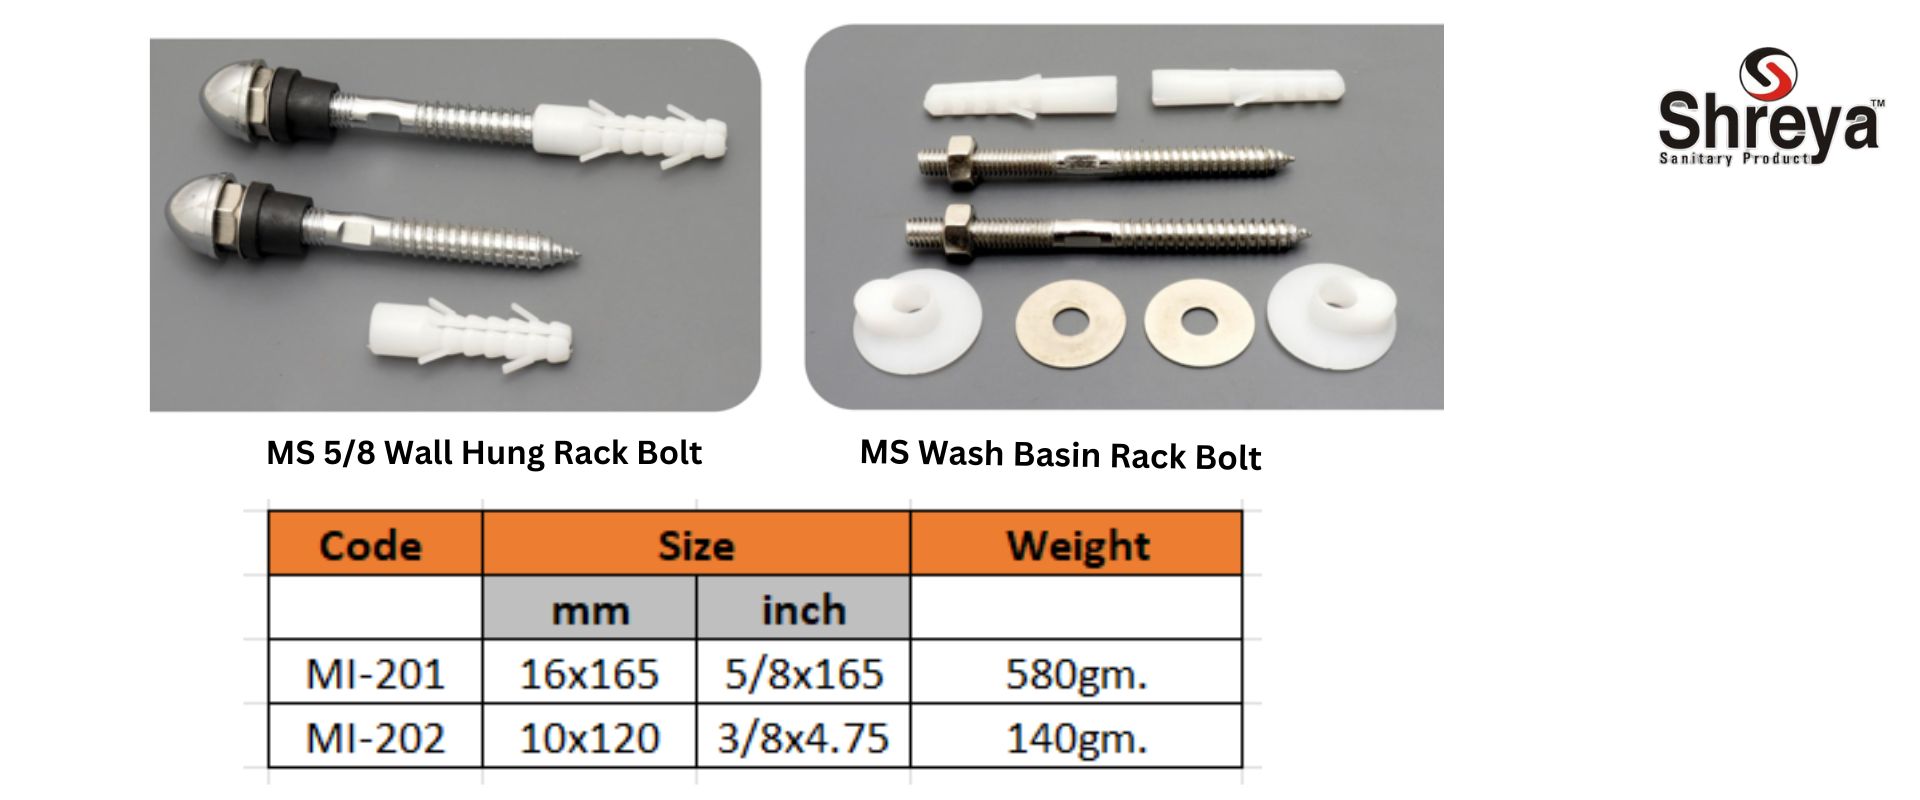 MS Wash Basin Rack Bolt